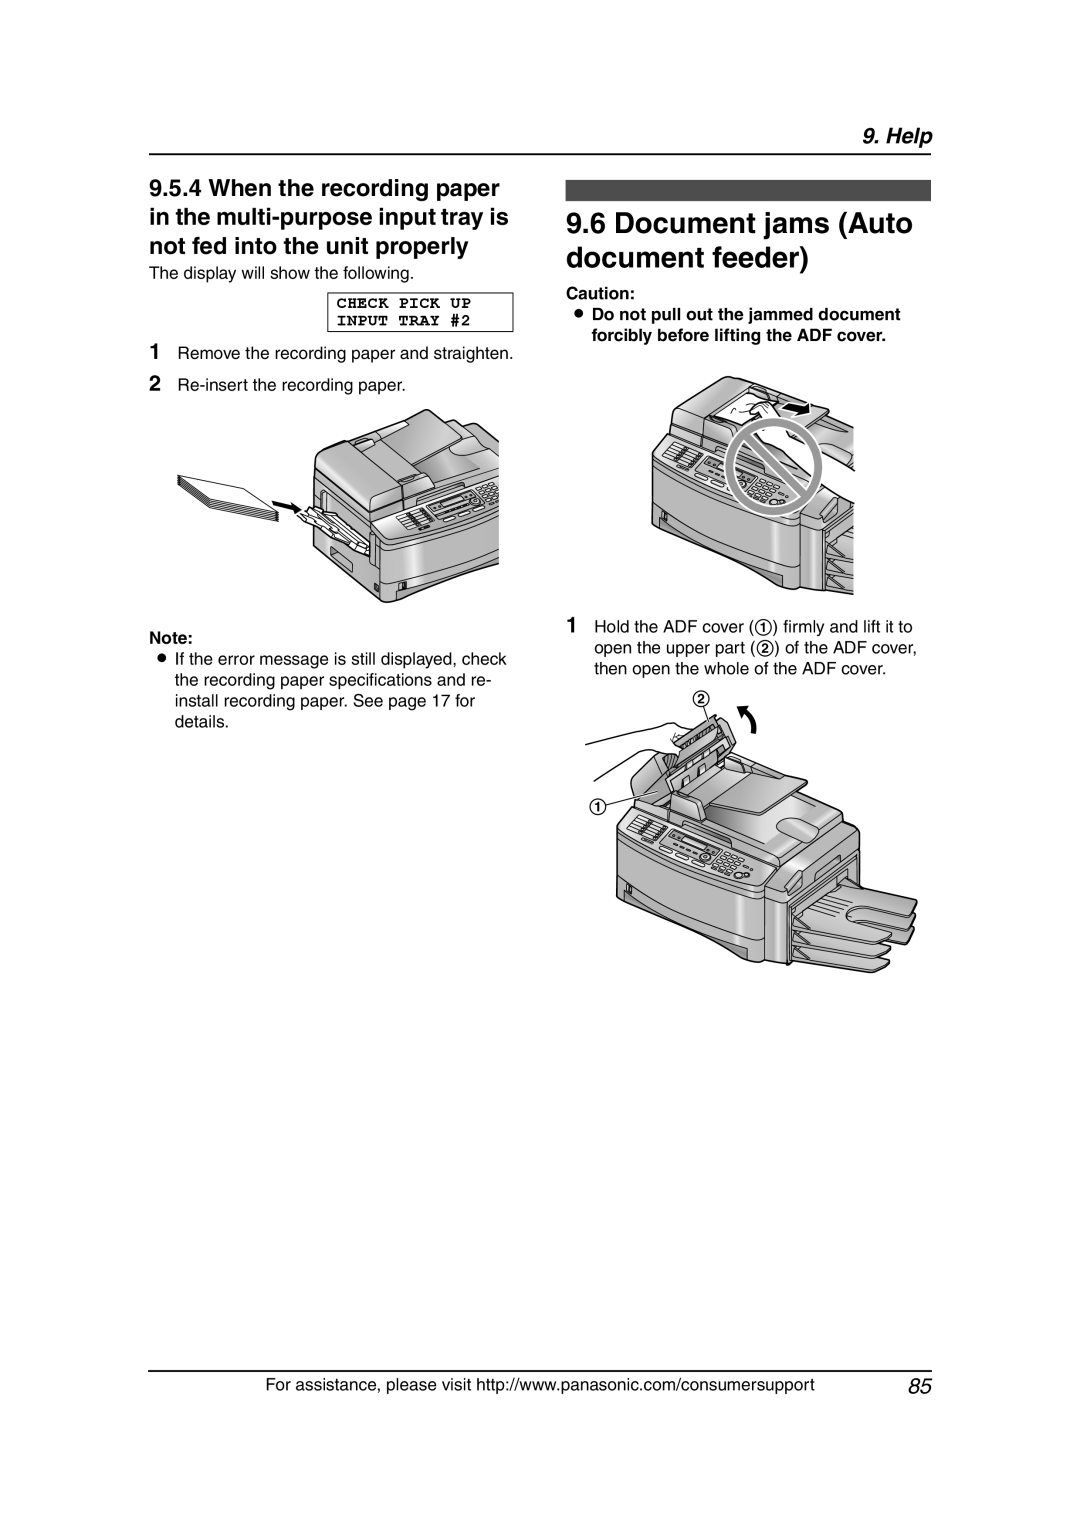 Panasonic KX-FLB851 manual Document jams Auto document feeder, CHECK PICK UP INPUT TRAY #2, Help 